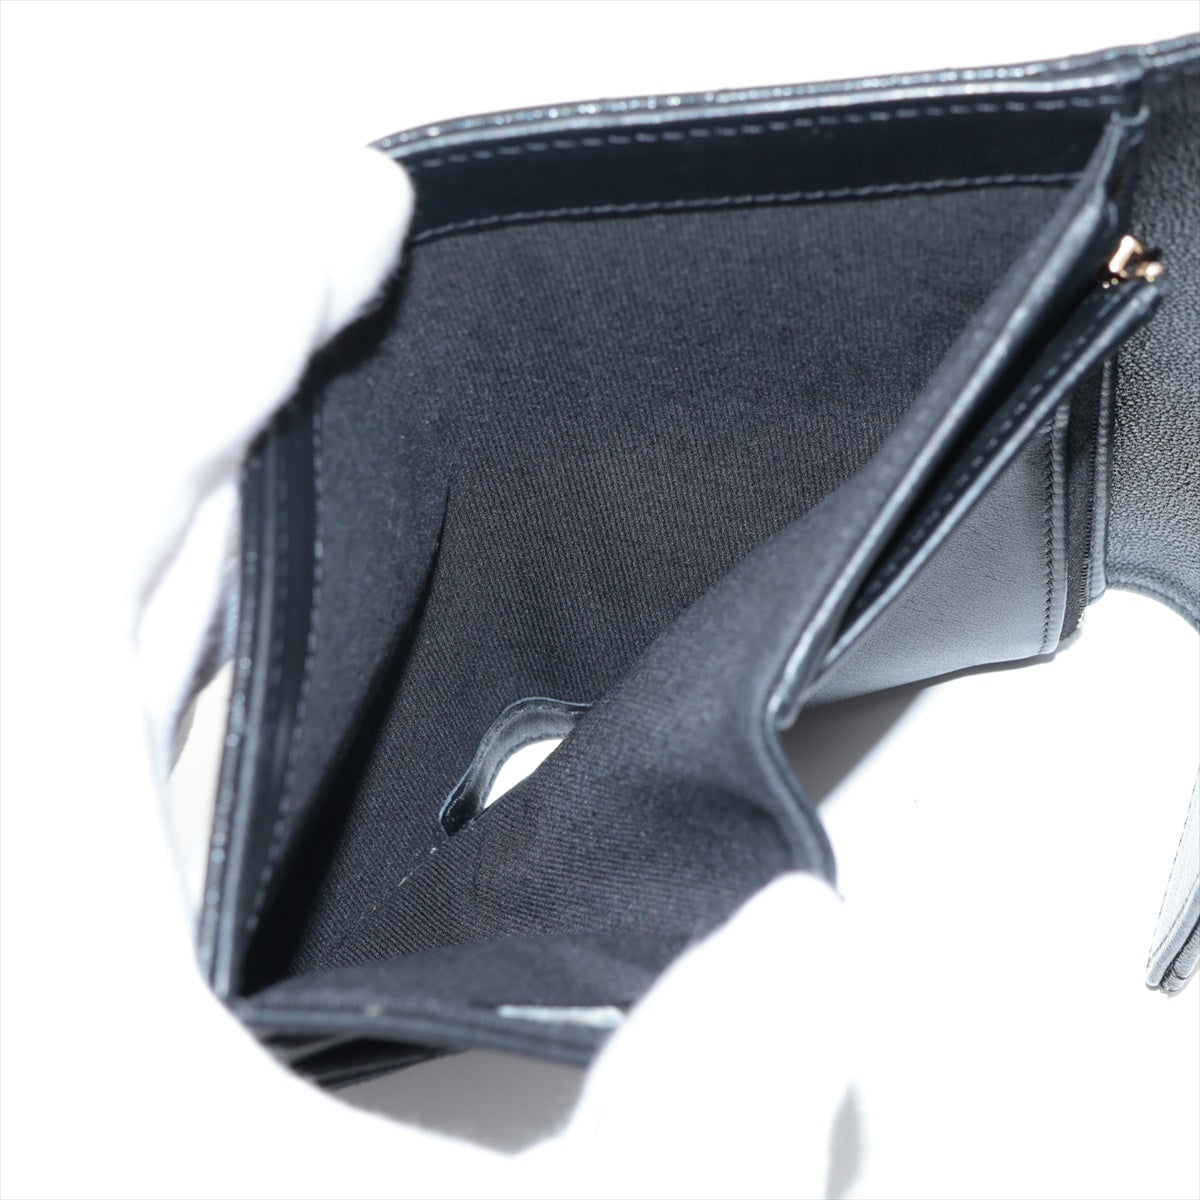 Chanel Matelasse Caviar Skin Compact Wallet Black Gold Metal Fittings random